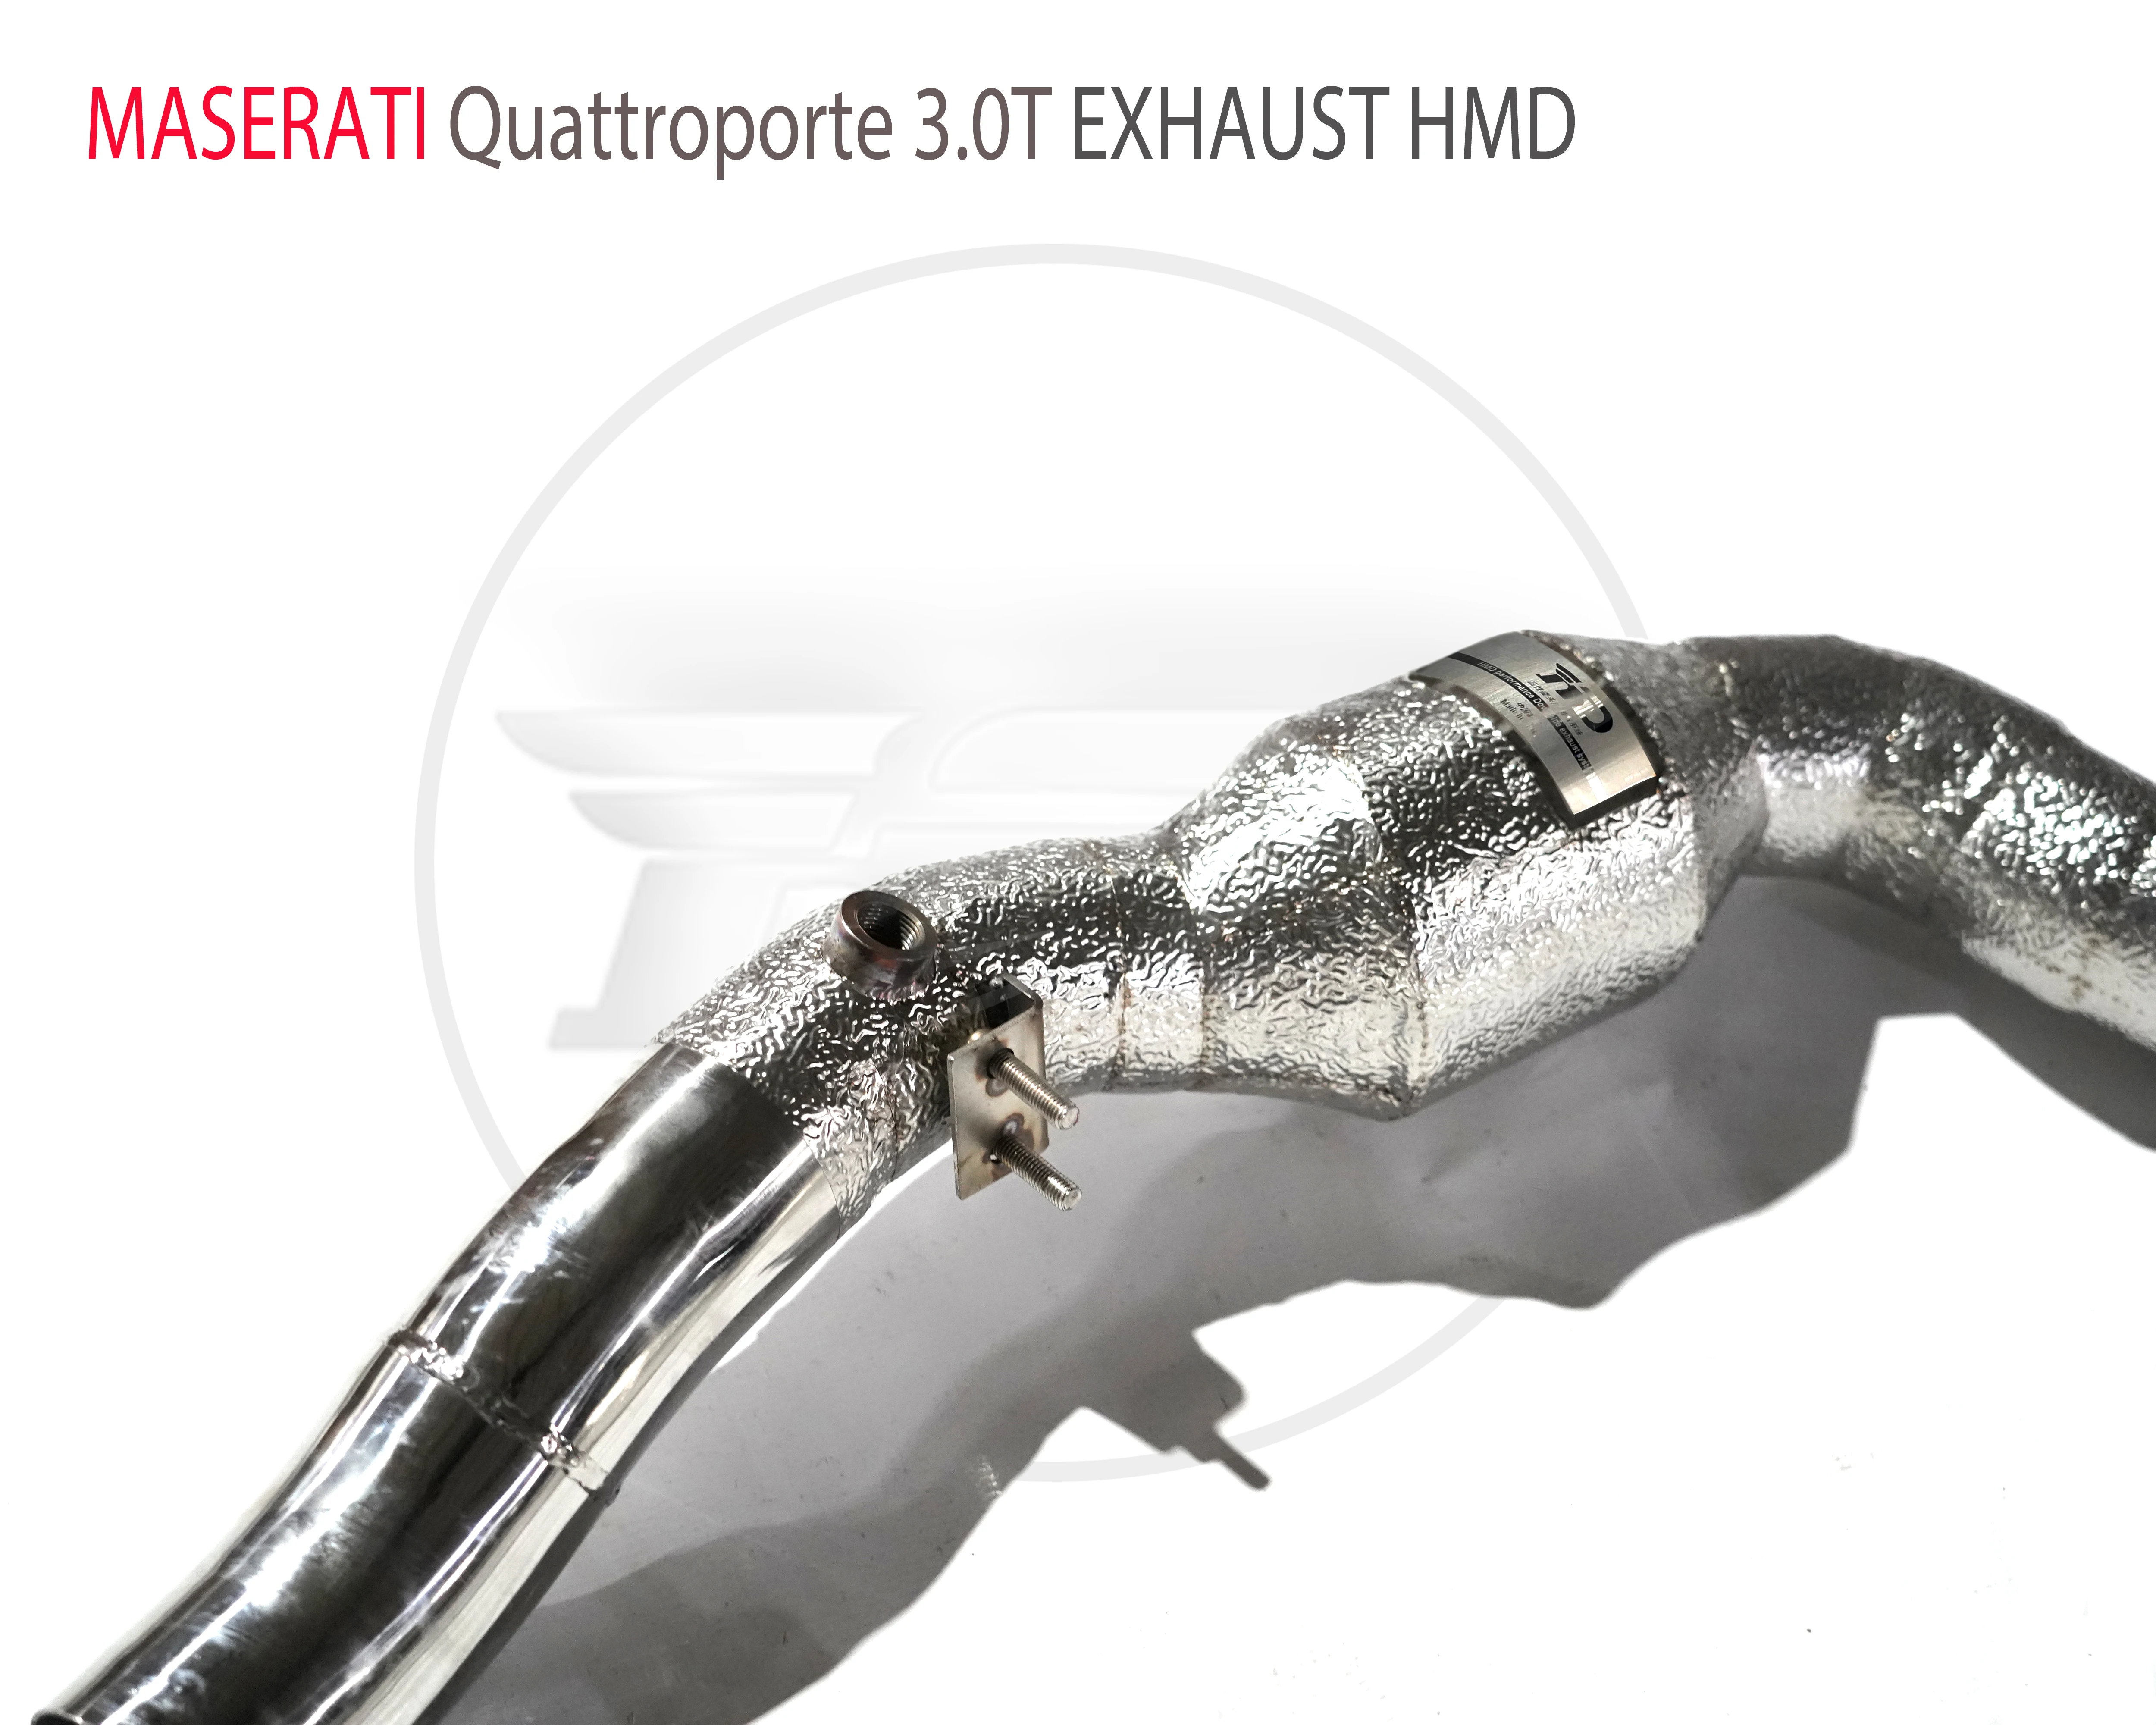 HMD נירוסטה סעפת פליטה עבור מזראטי Quattroporte 3.0 T אביזרי רכב עם קטליטי כותרת ללא חתול צינור . ' - ' . 3